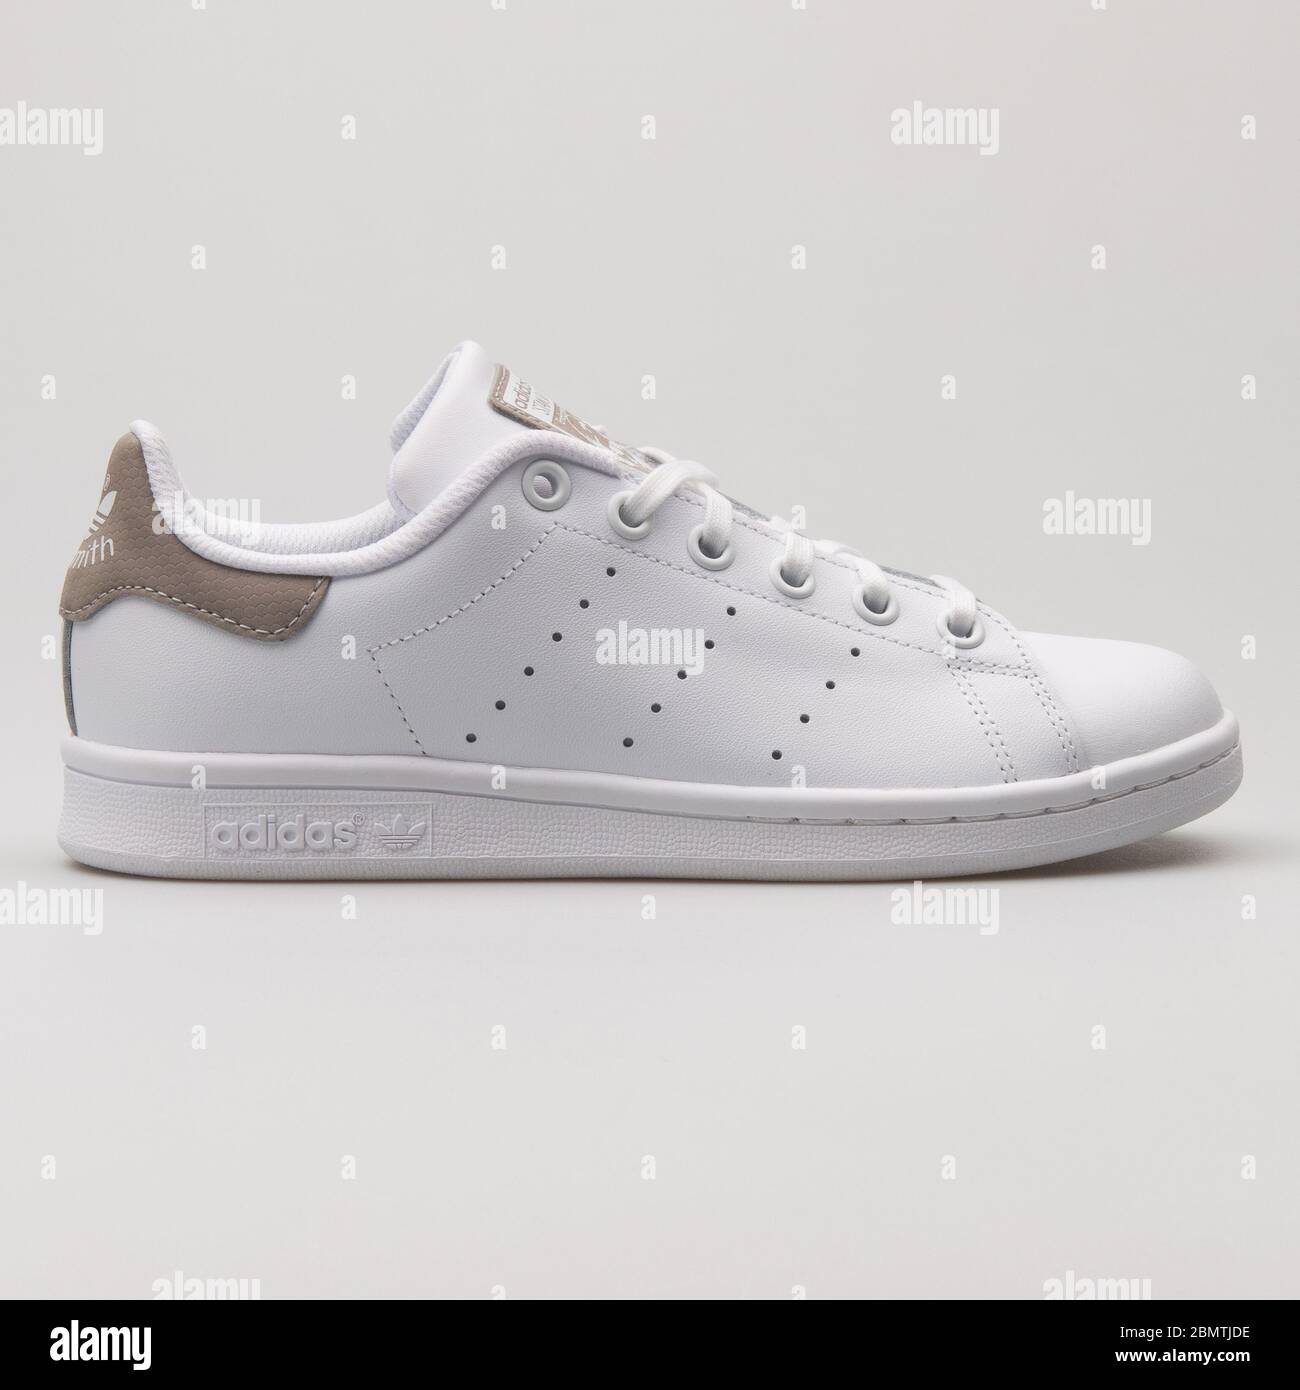 VIENNA, AUSTRIA - 14 FEBBRAIO 2018: Sneaker Adidas Stan Smith bianco e  marrone su sfondo bianco Foto stock - Alamy